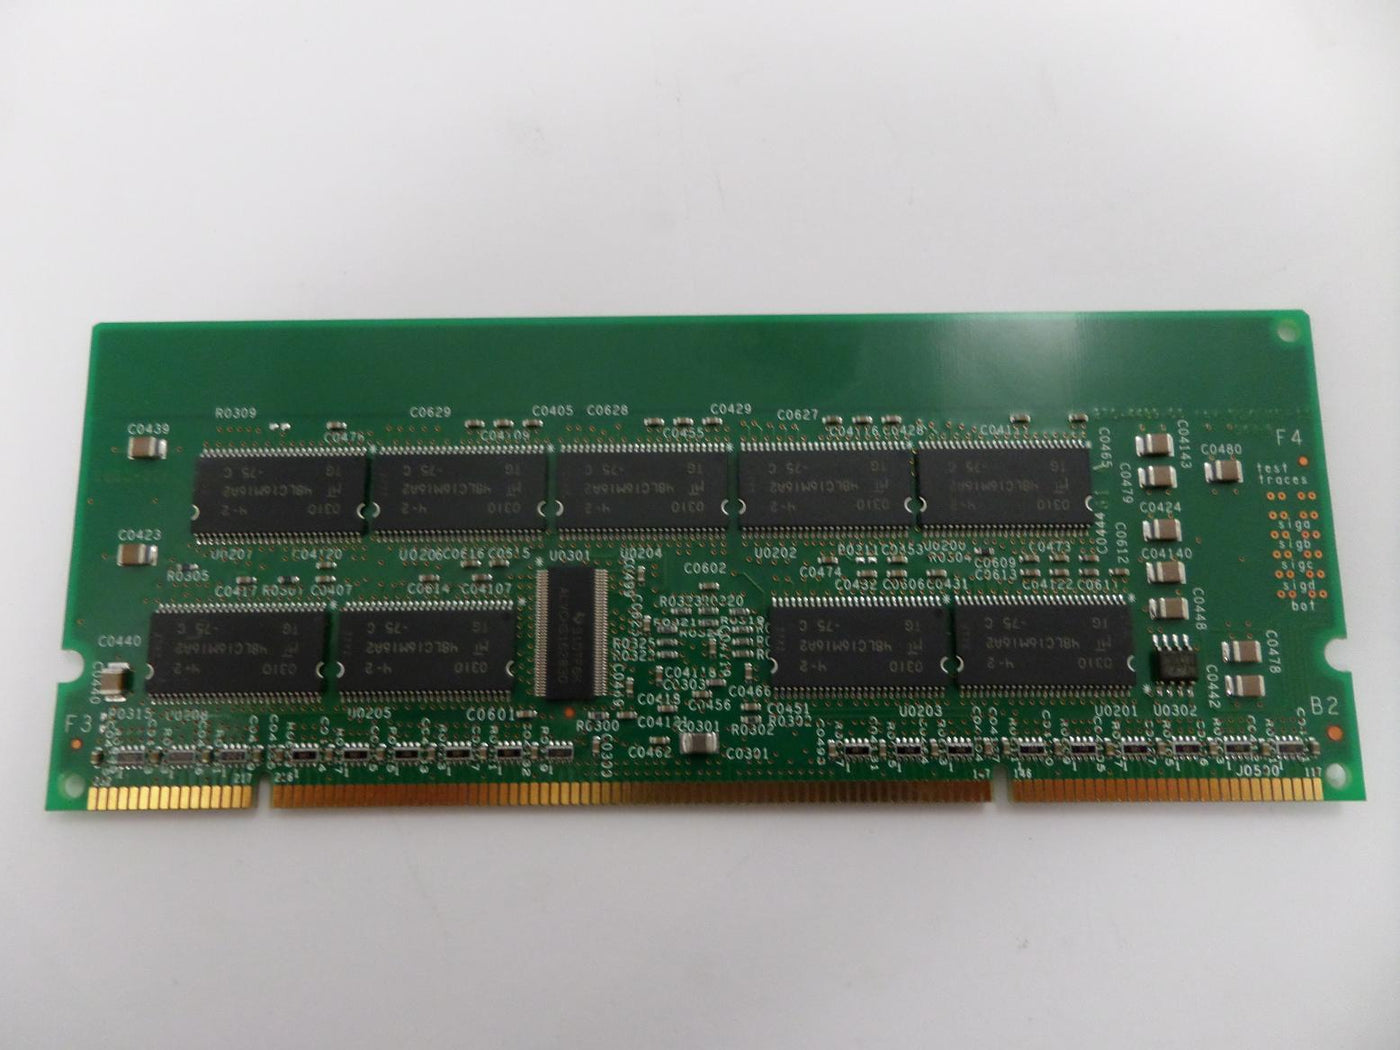 PR23080_MT18LSDT32144G-75C3_Sun/Micron 512MB PC100 SDRAM 100MHz 232-Pin DIMM - Image4